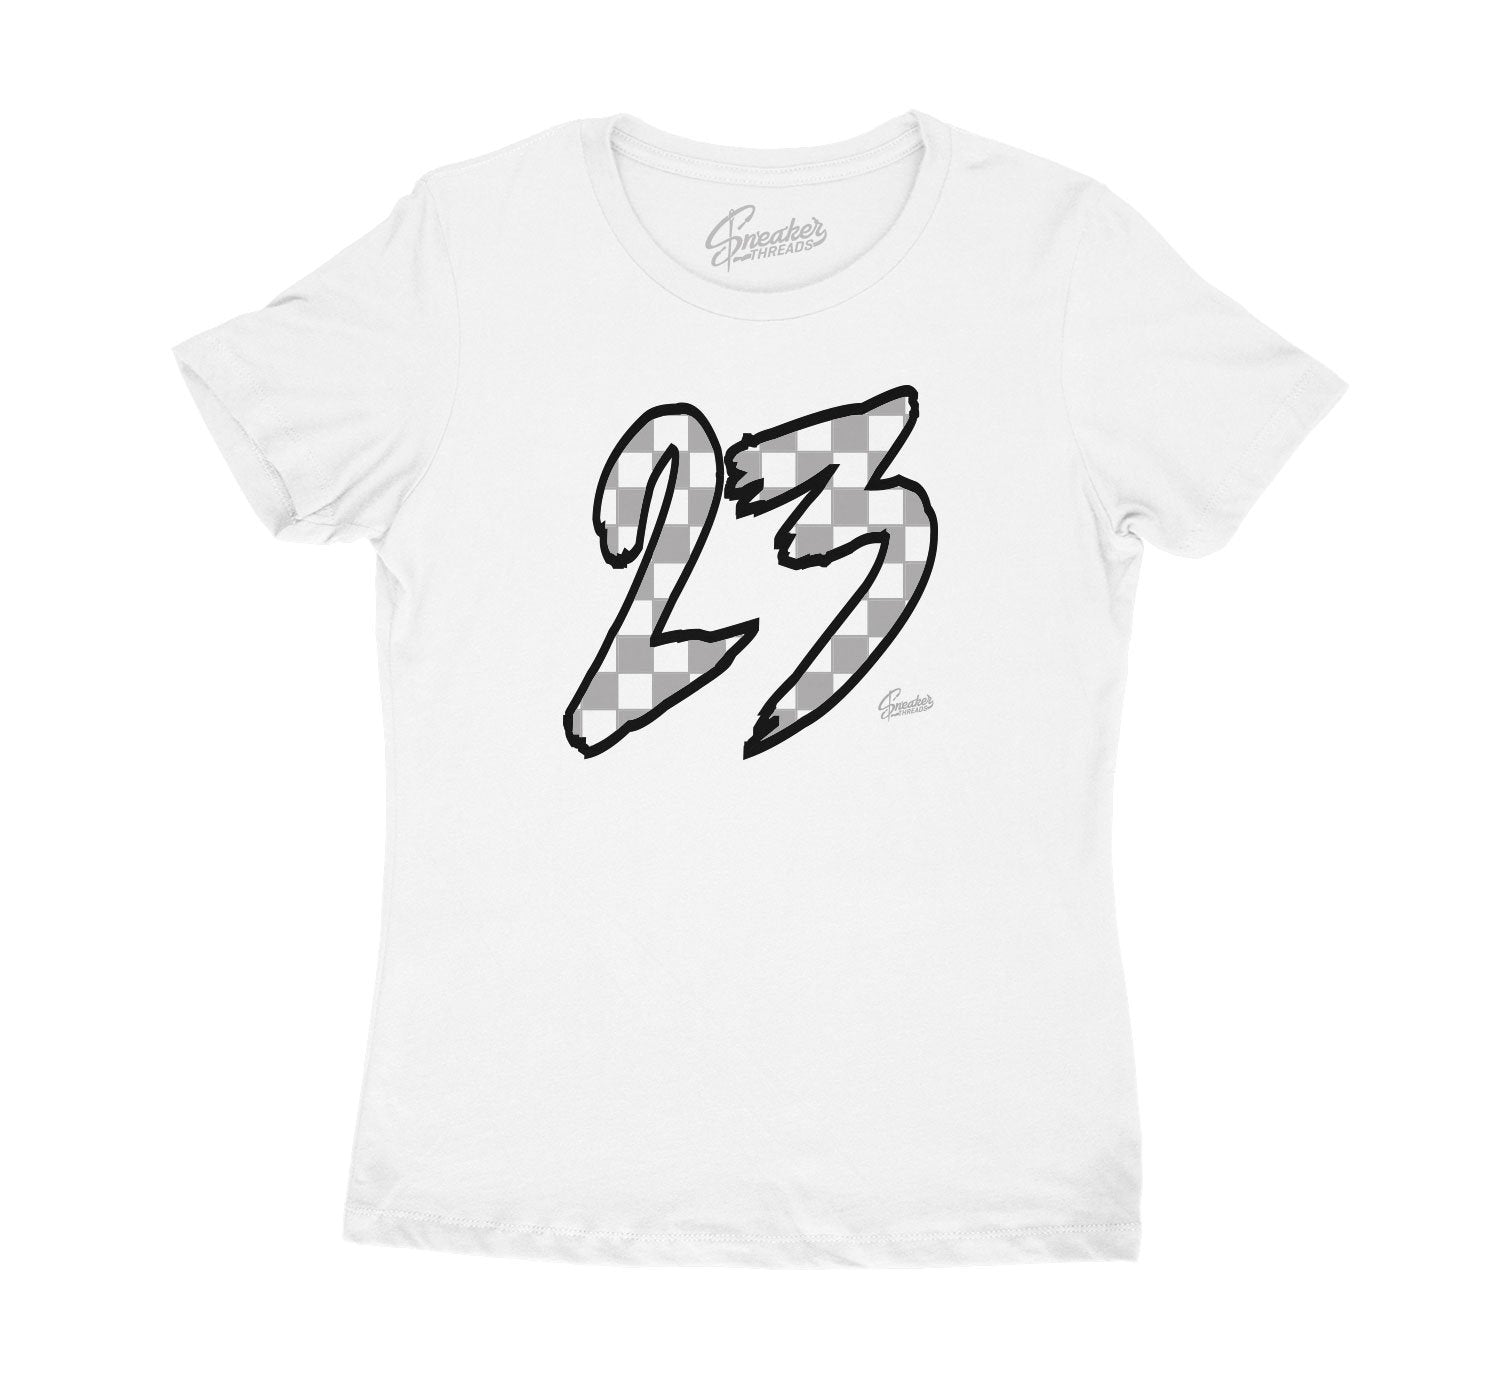 Jordan 23 Womens shirt to match fit with Metallic 11's